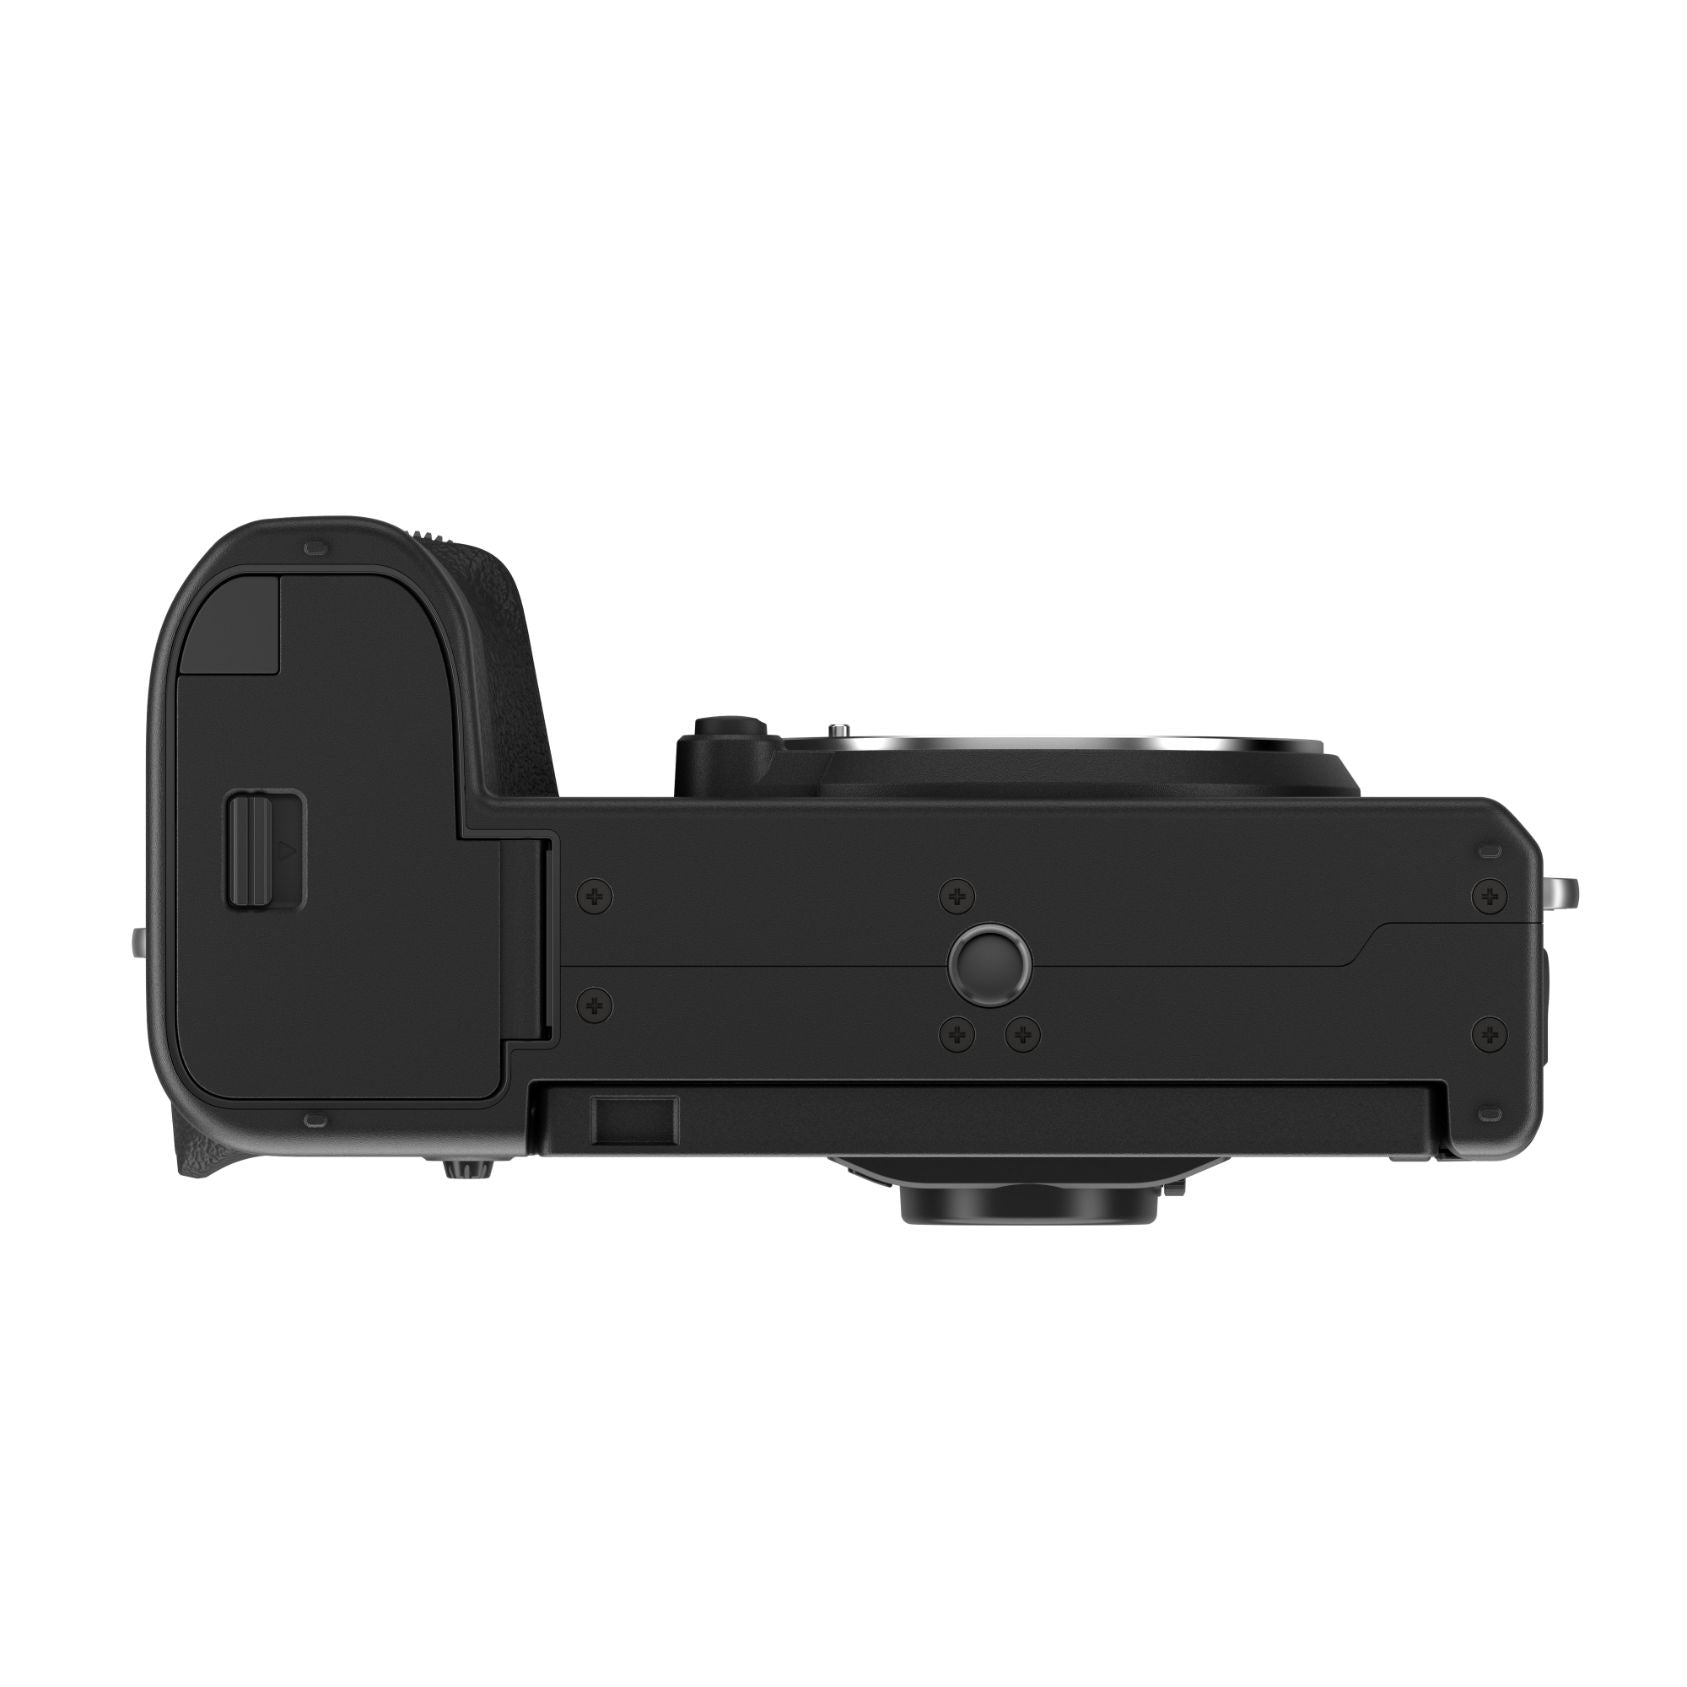 Fujifilm X-S20 mirrorless camera with XF 18-55mm F2.8-4 R lens - Black